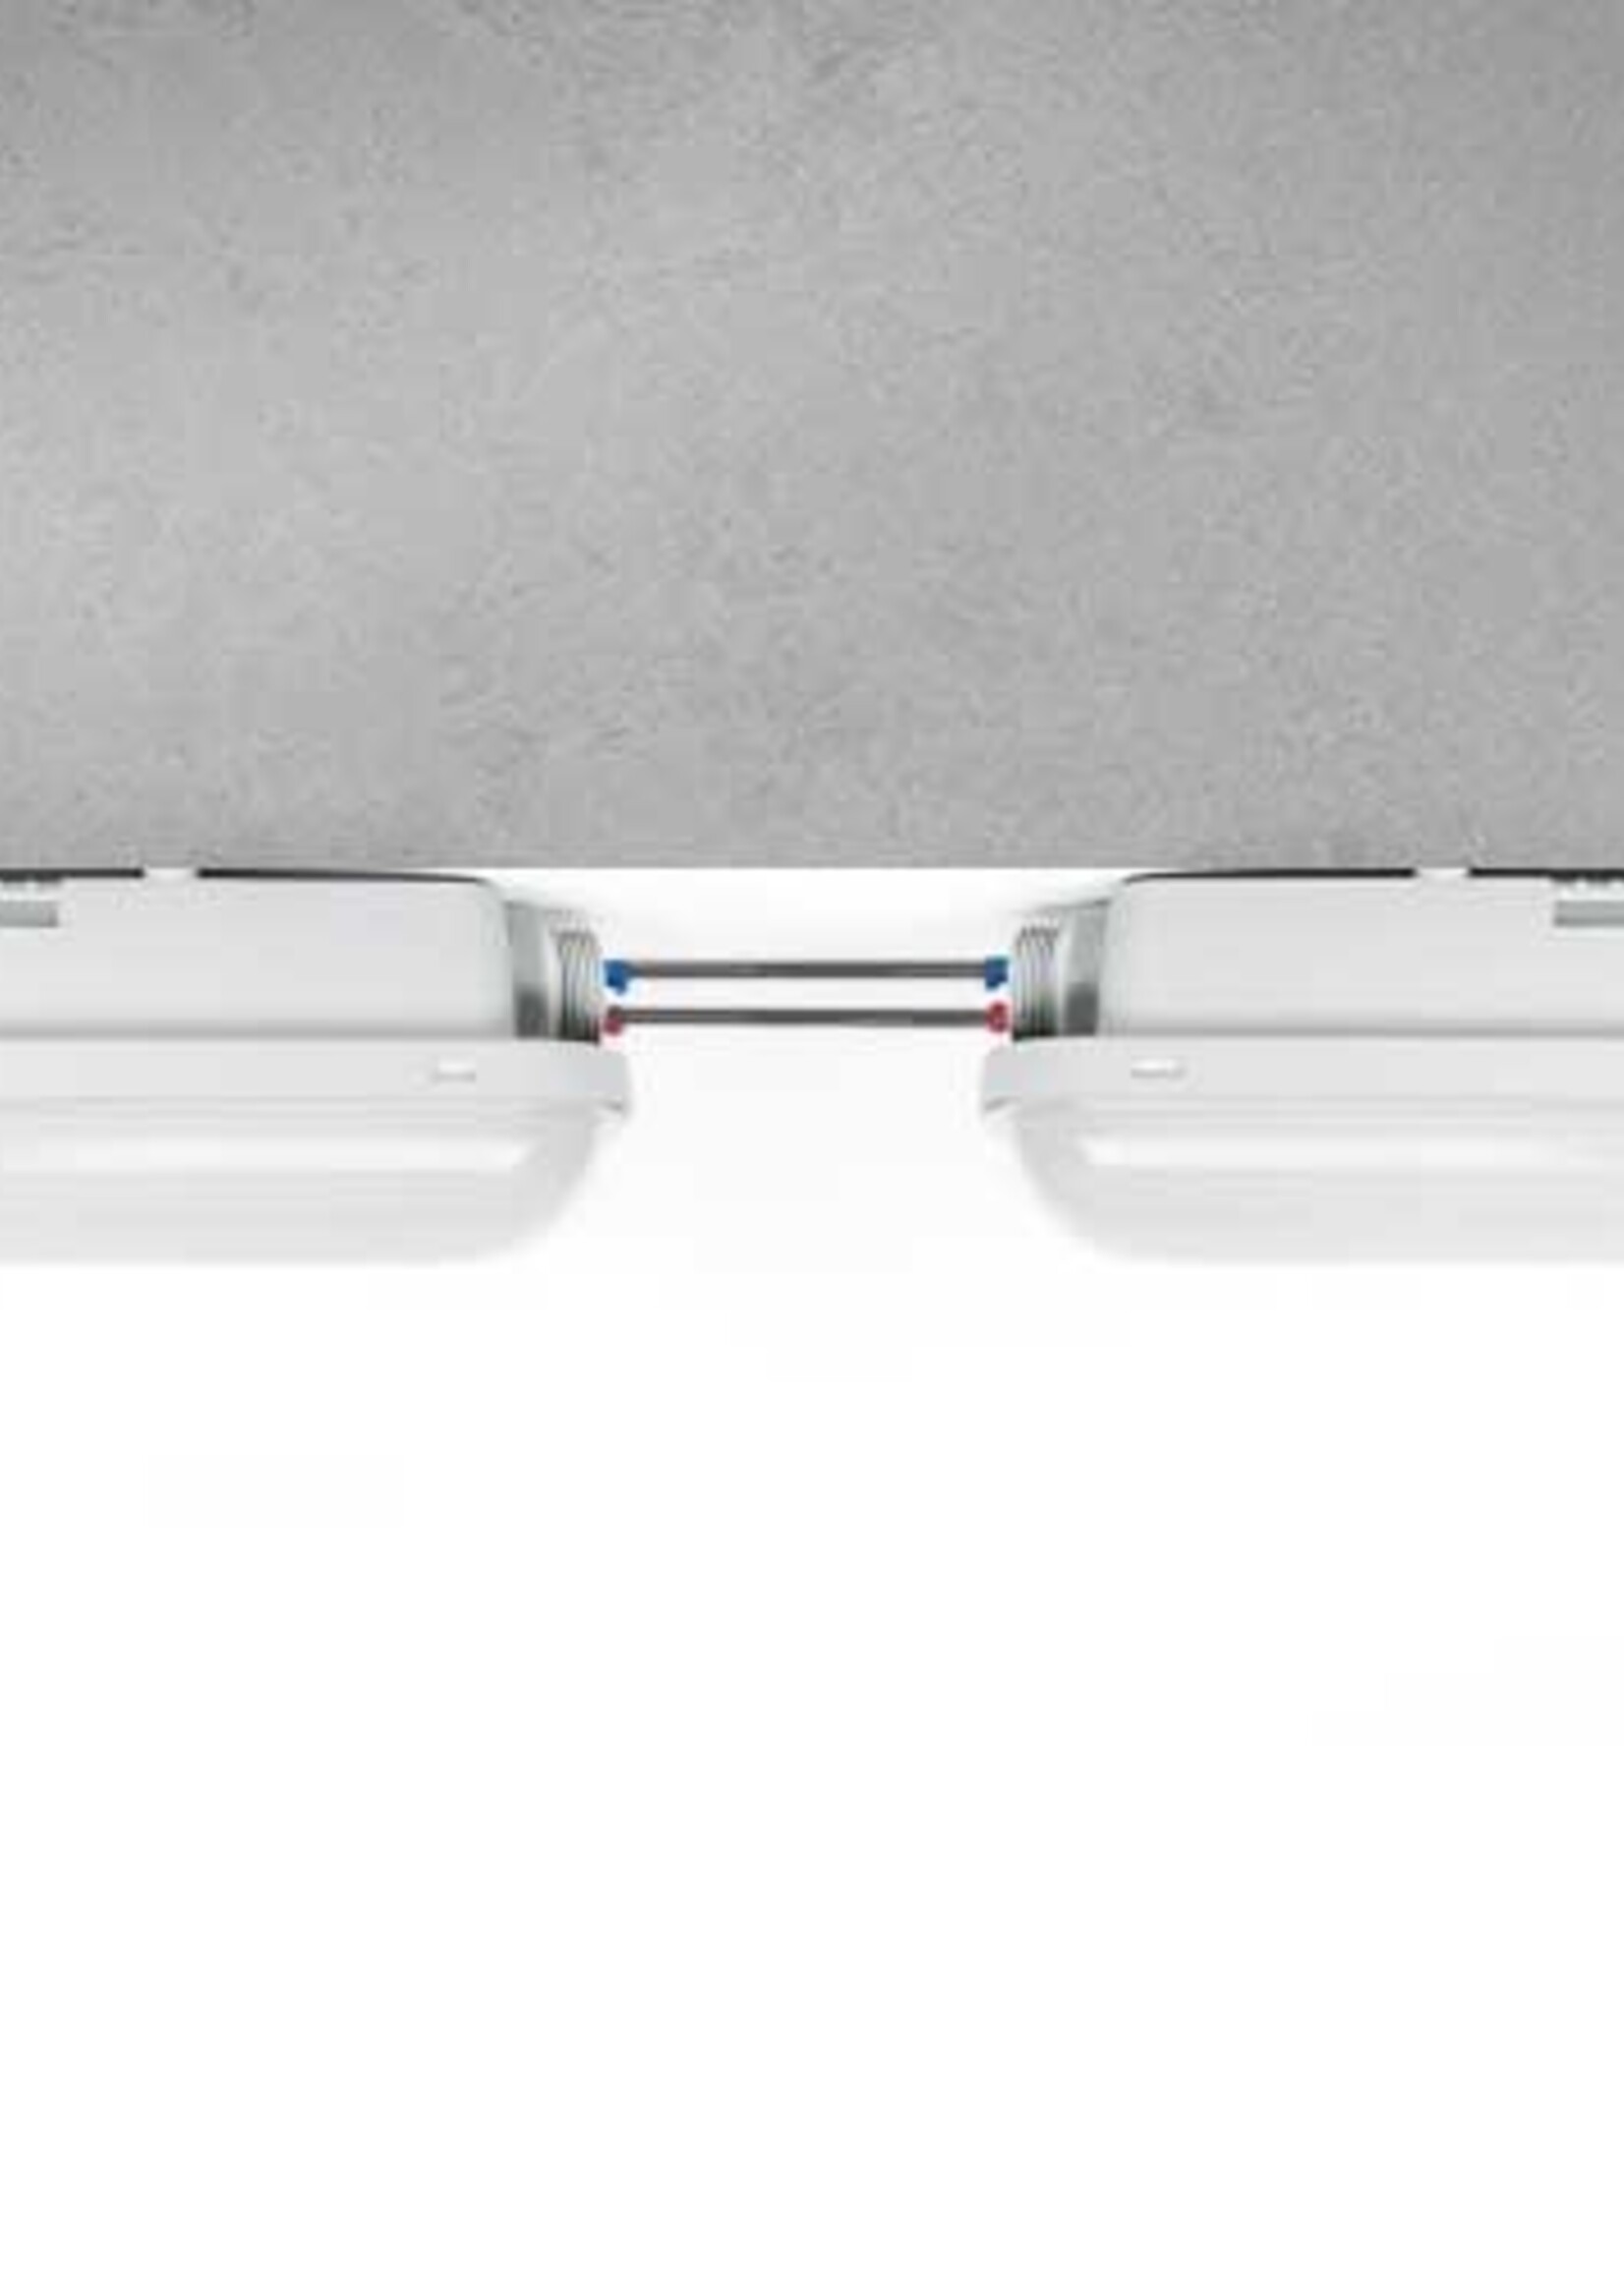 LEDWINKEL-Online LED Tri-Proof Light IP65 Water resistant 60cm connectable 24W